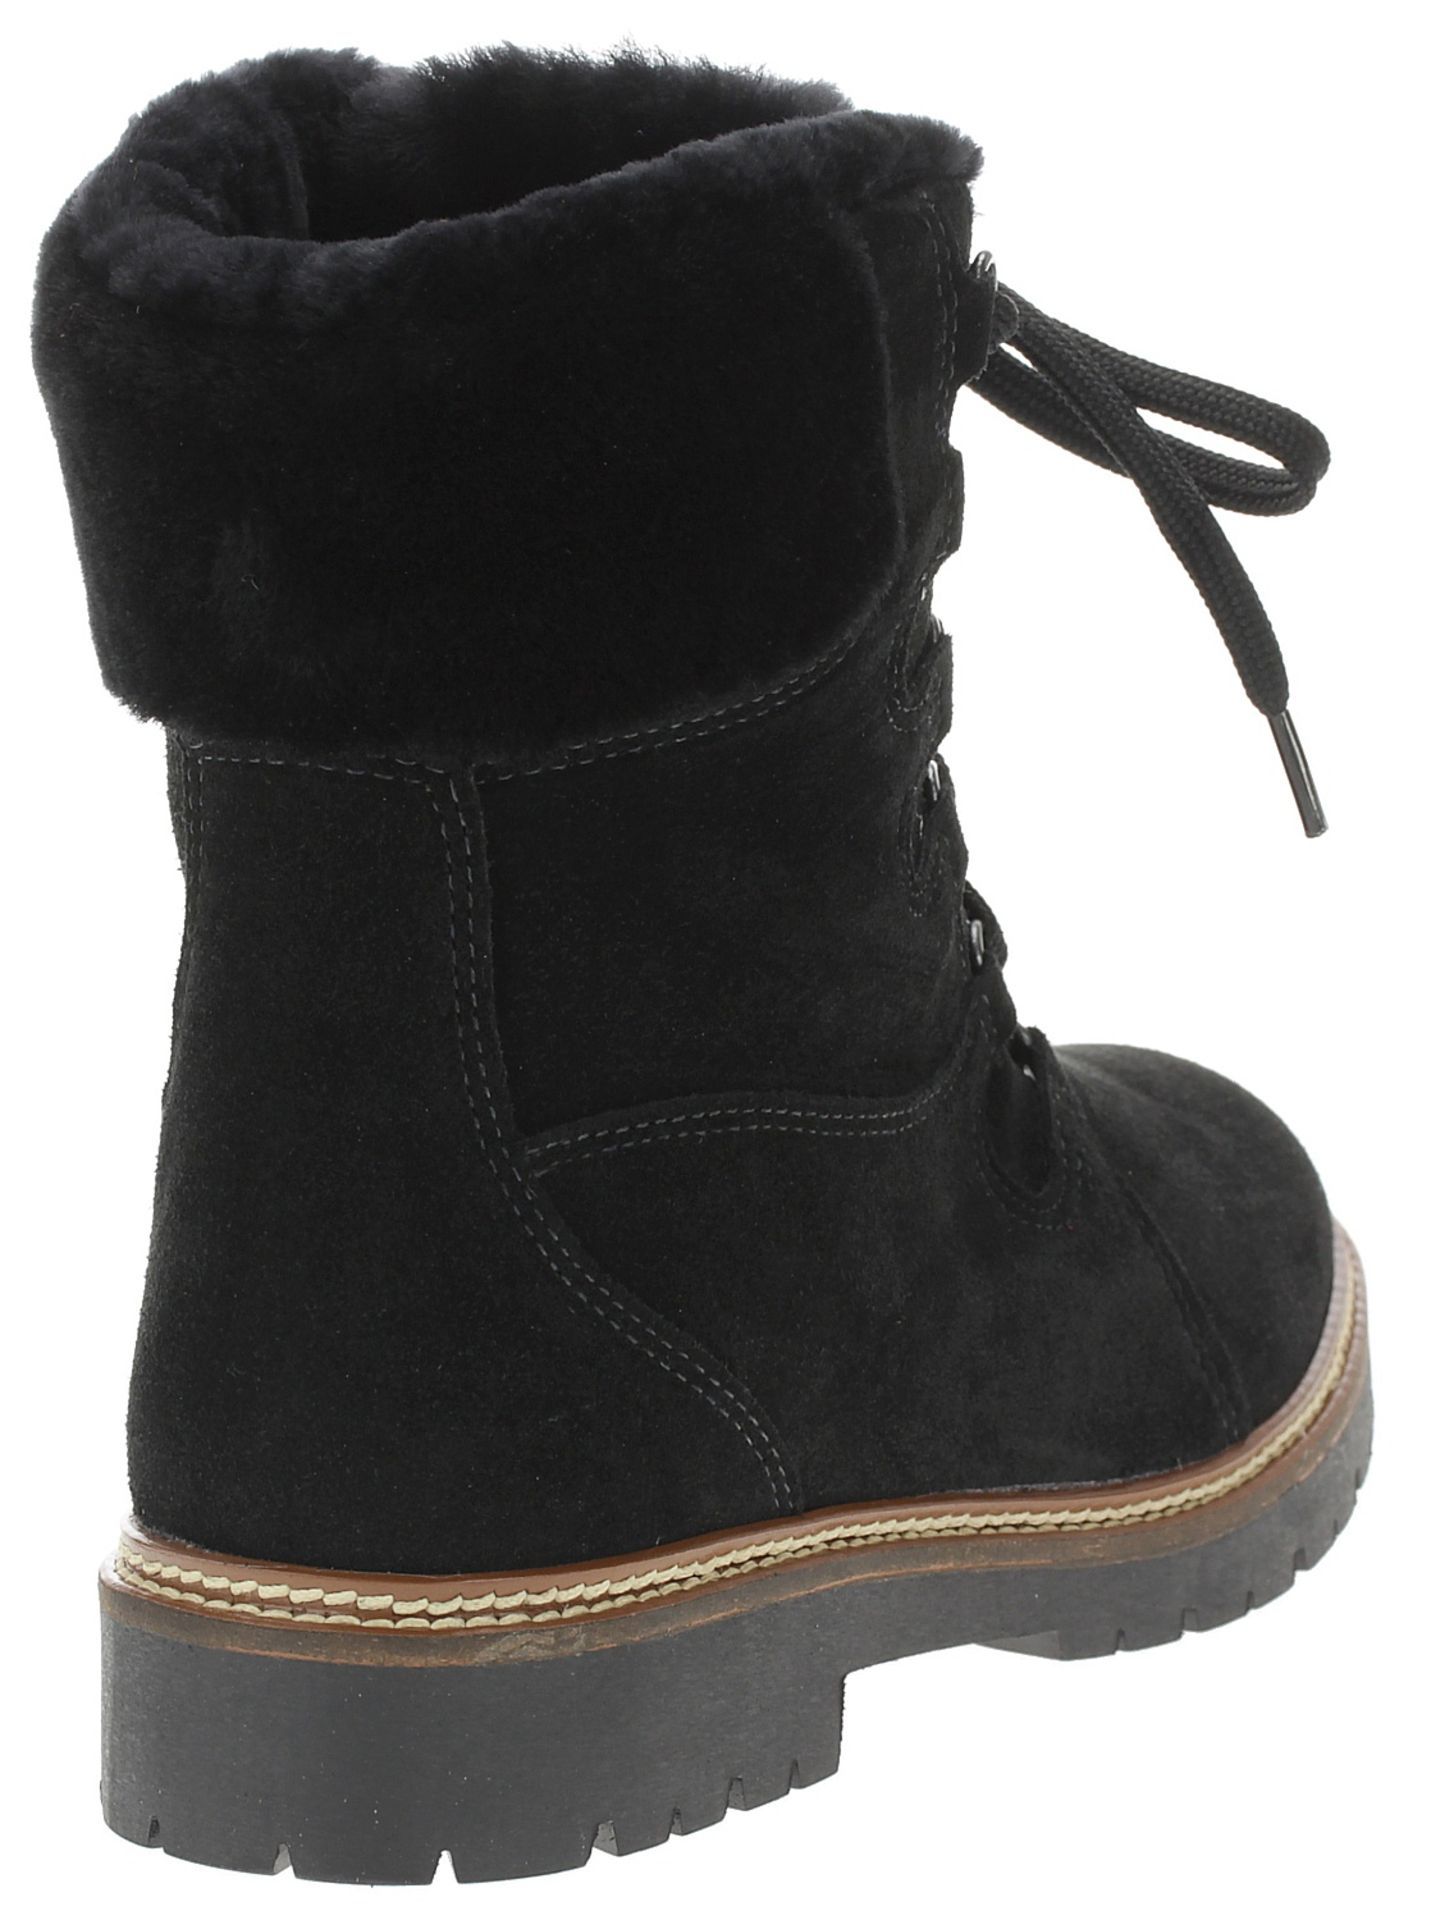 1 x Pair of Designer Olang Meribel 81 Nero Women's Winter Boots - Euro Size 41 - Brand New Boxed - Image 3 of 5